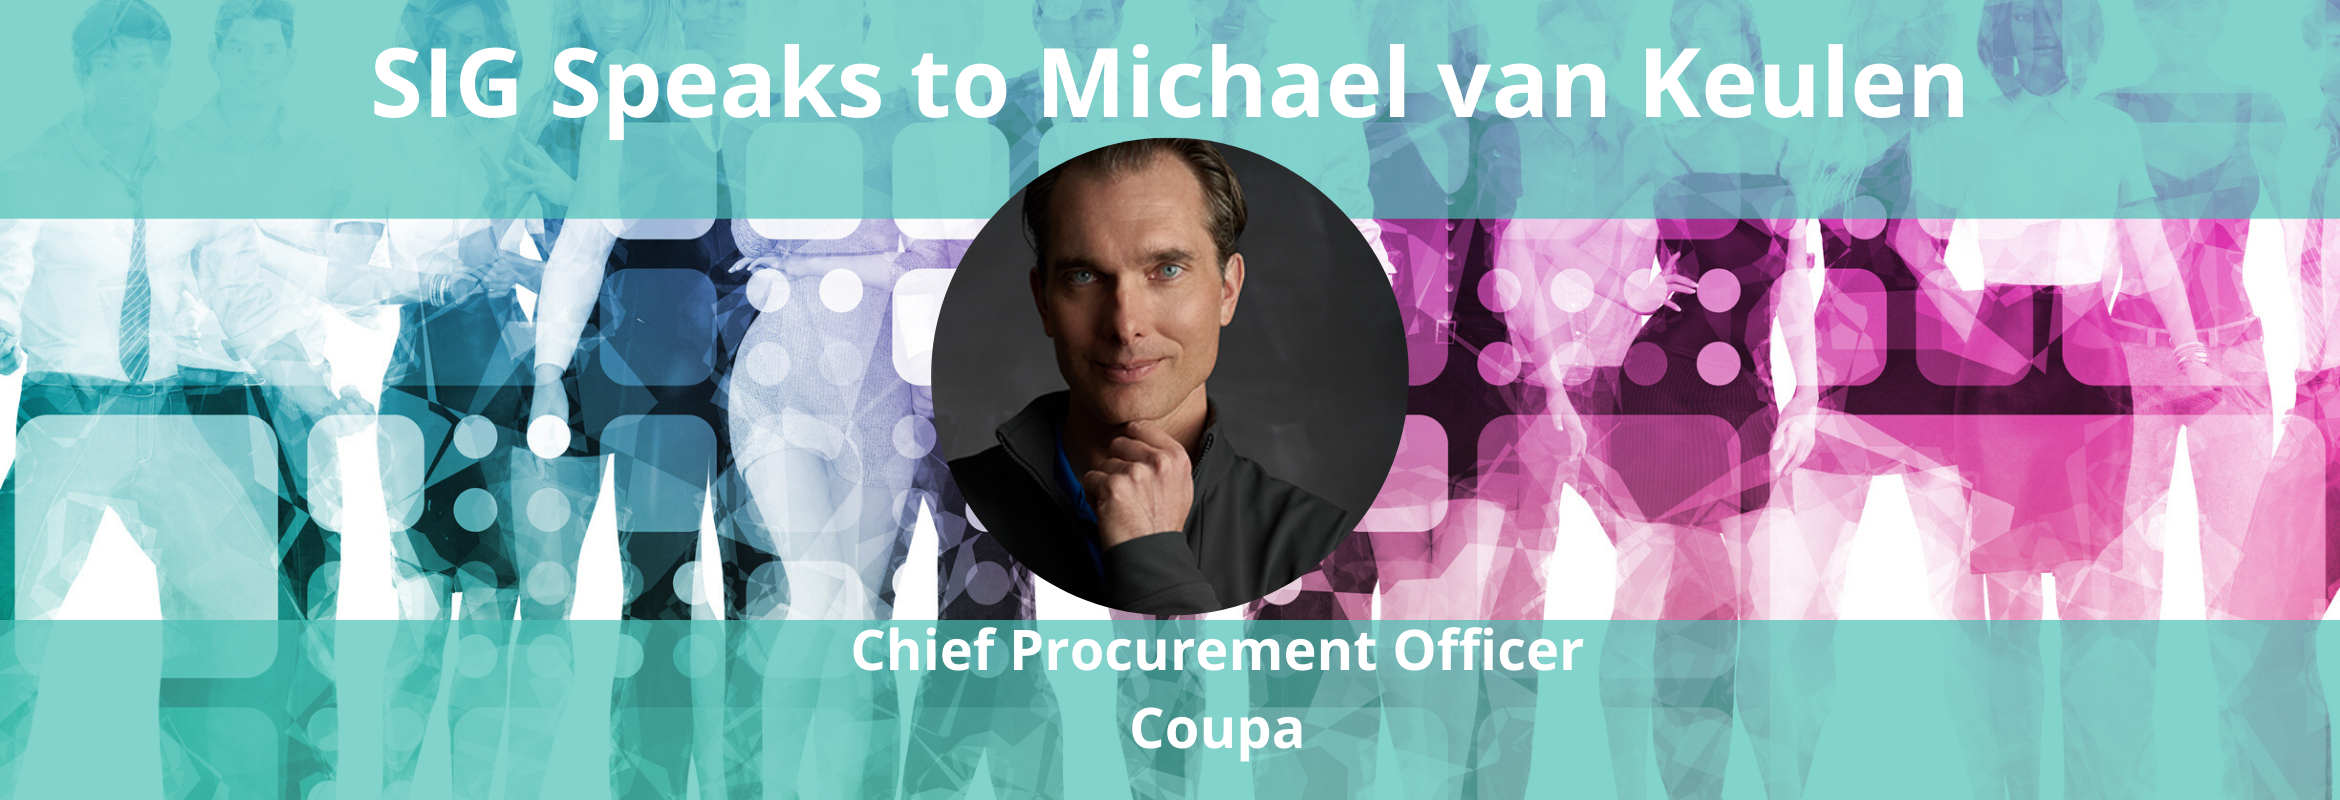 Michael van Keulen is the Chief Procurement Officer of Coupa